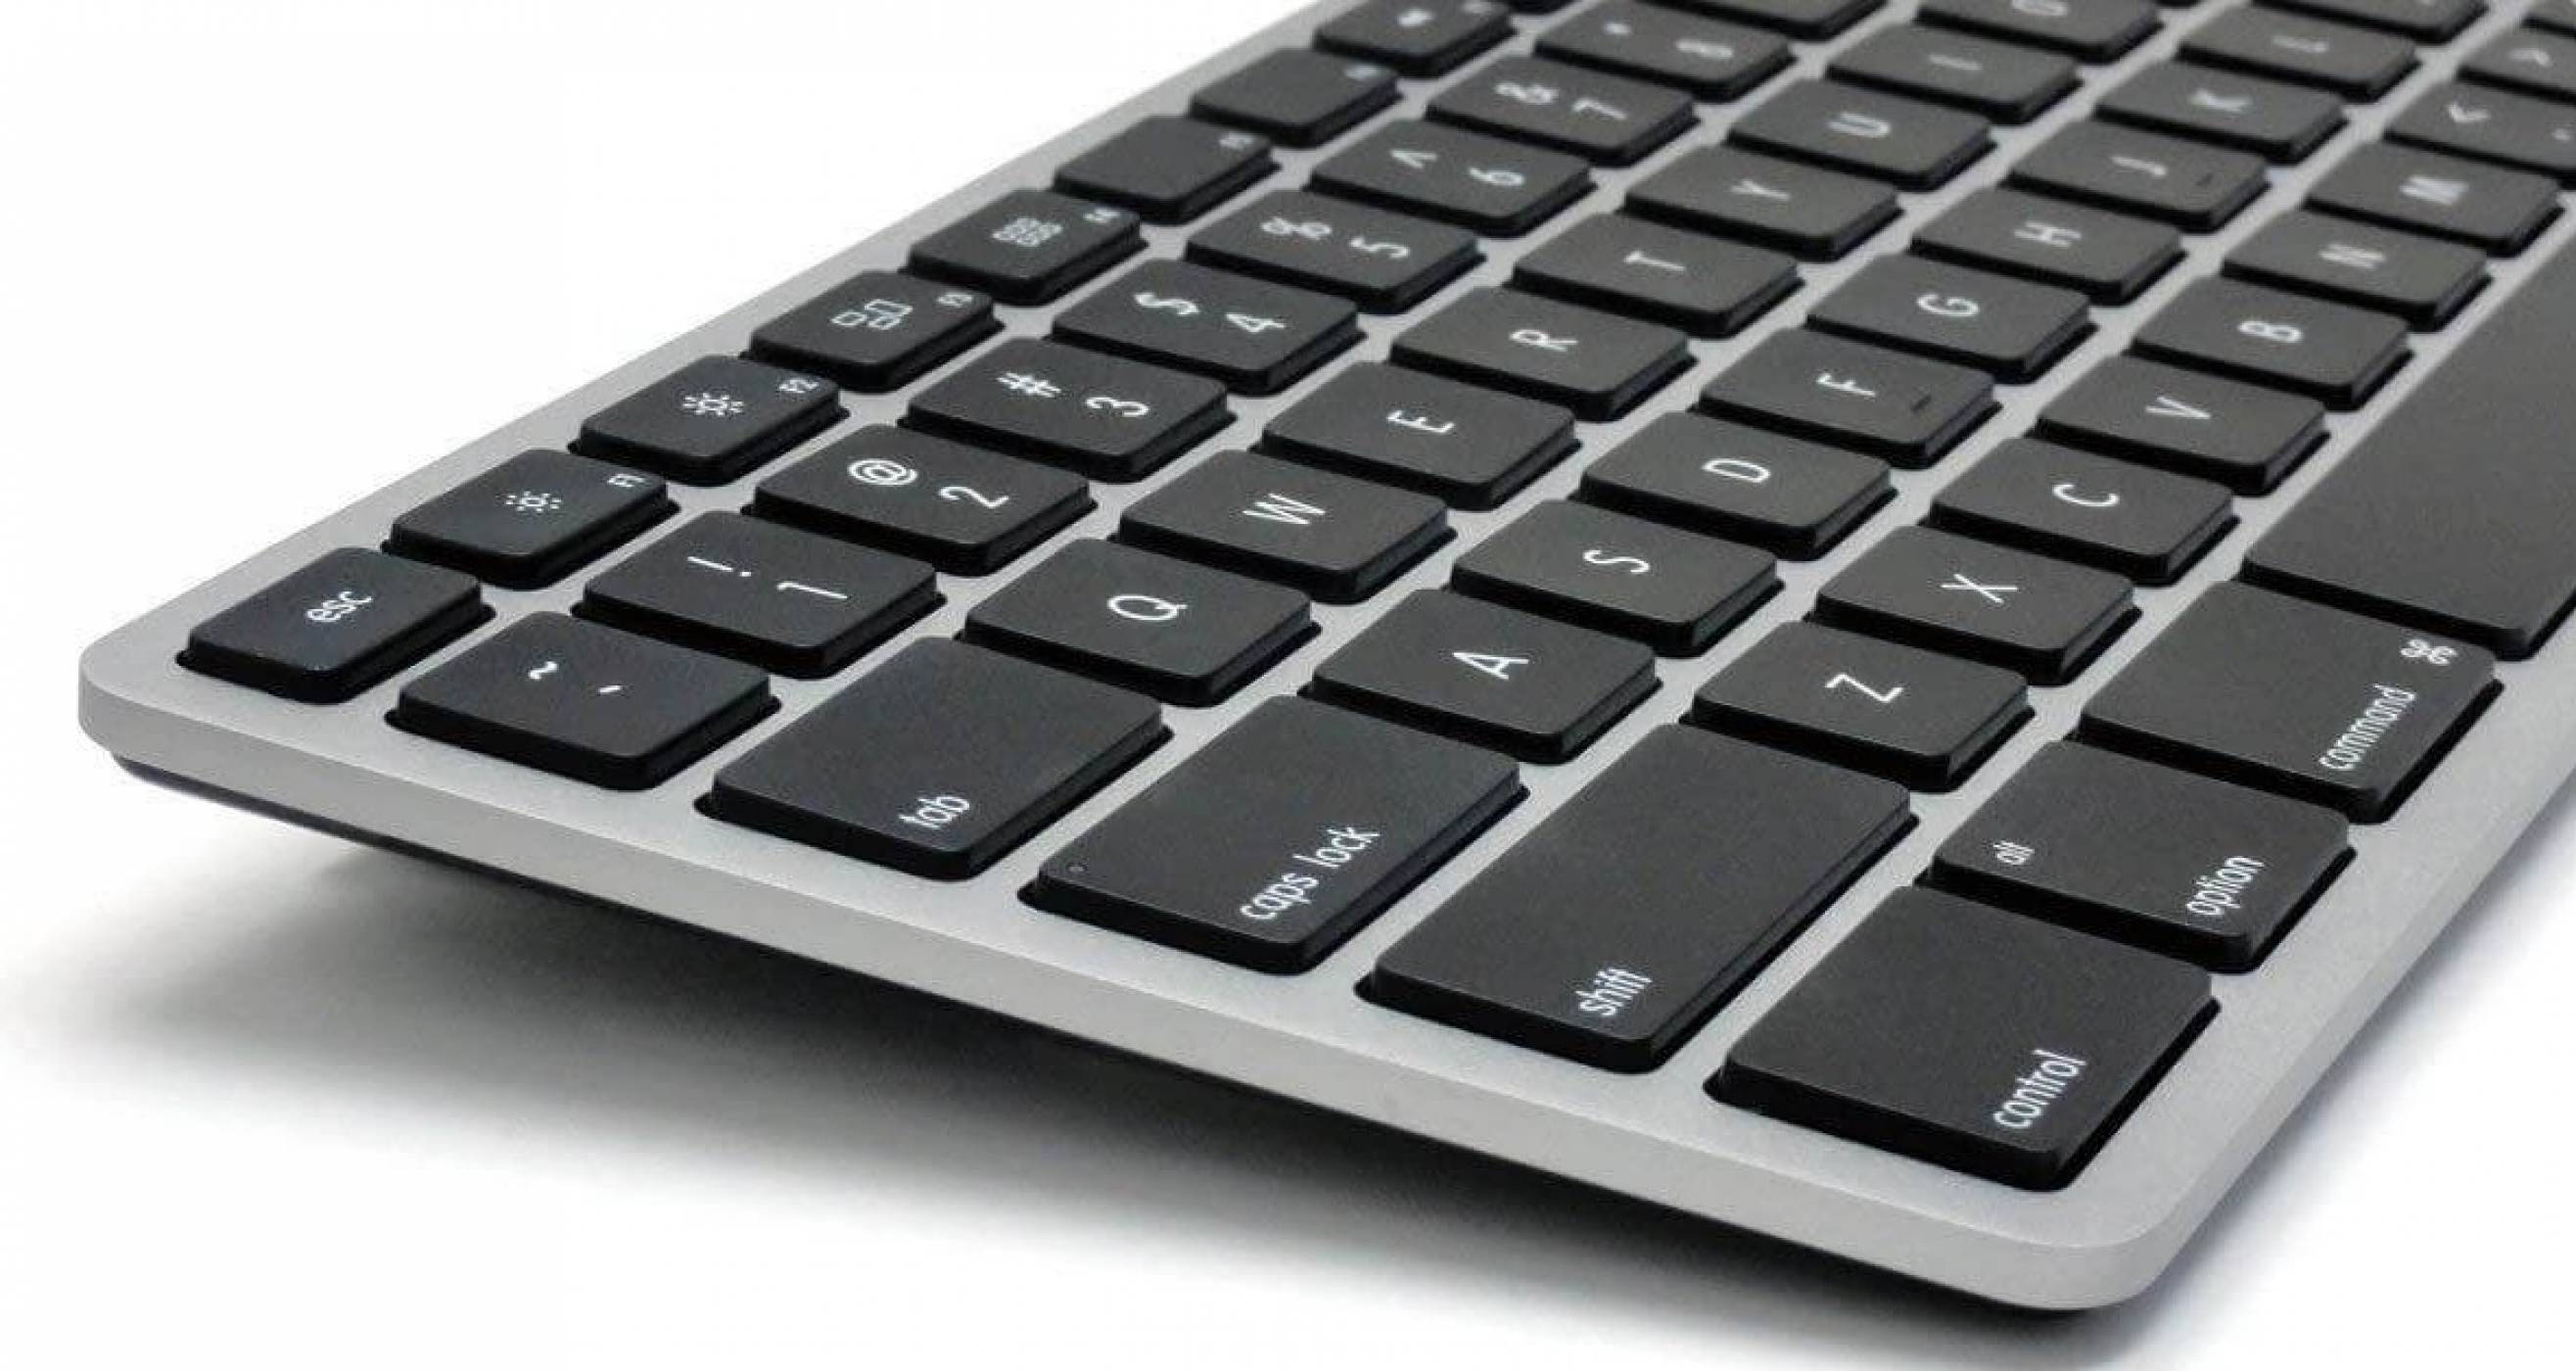 Apple ли прави най-добрите клавиатури? Тази красавица не мисли така...